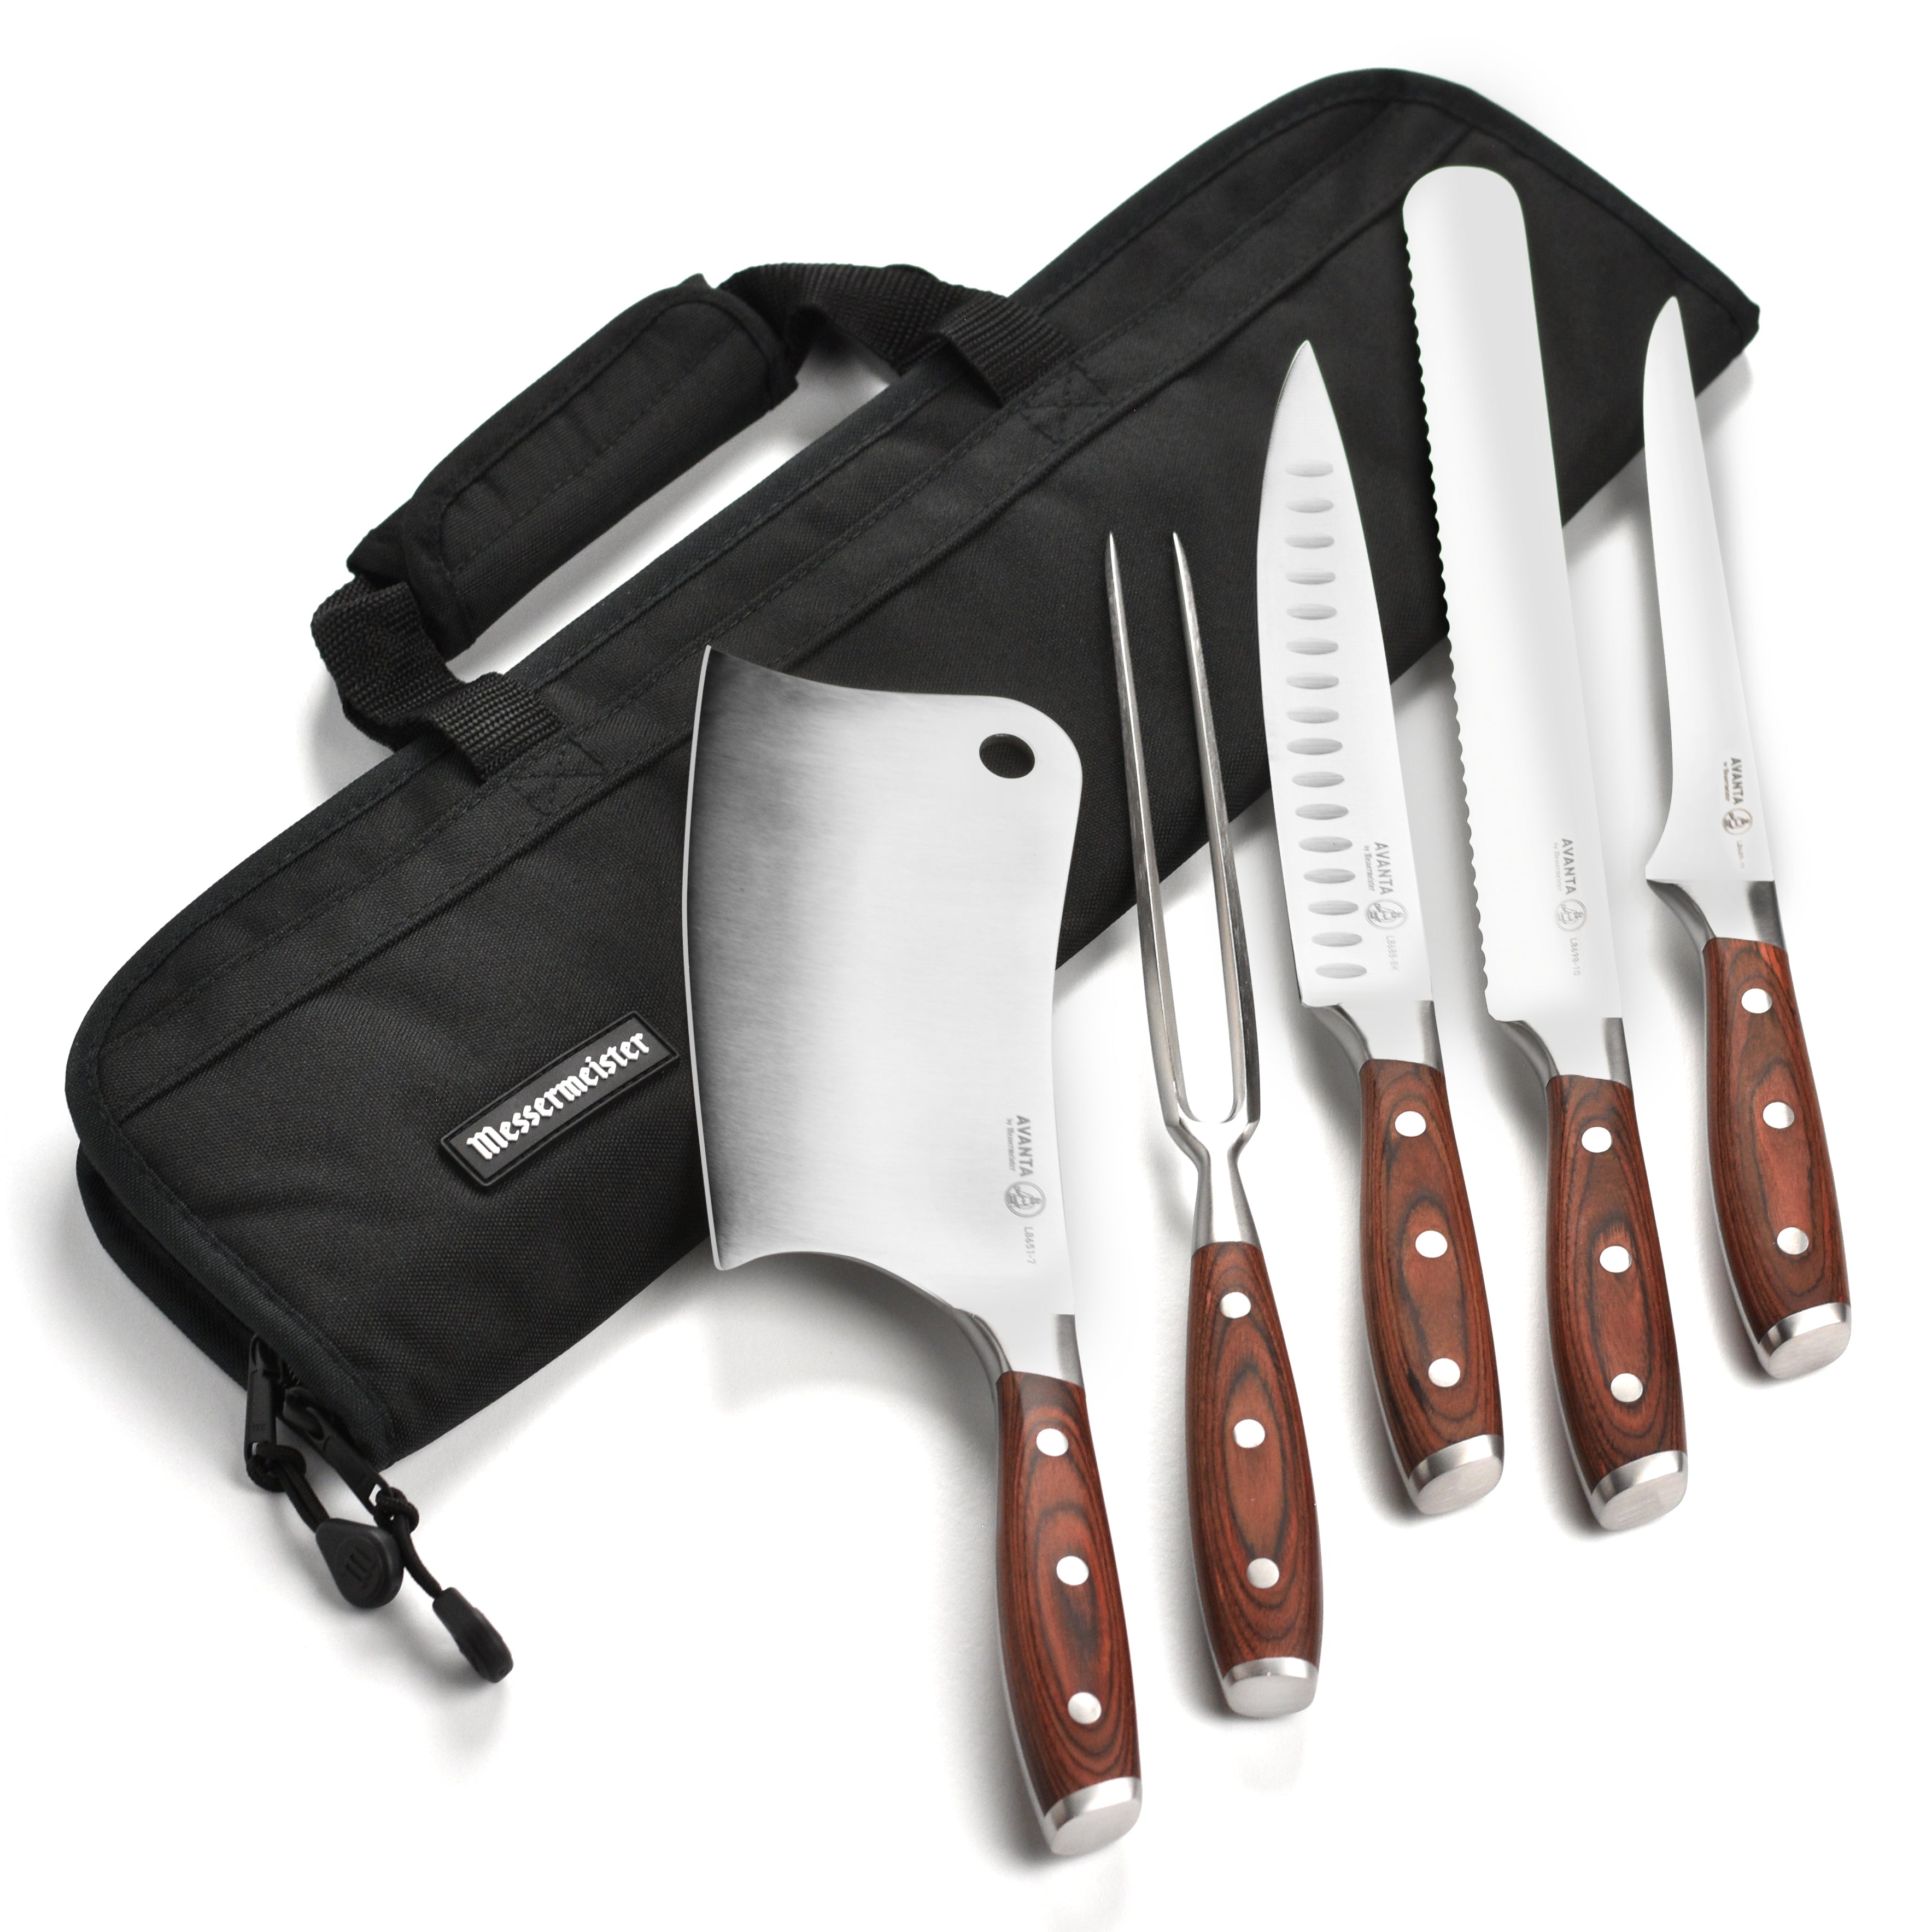 Messermeister avanta Chef's Knife knives Culinary Set + Travel Case